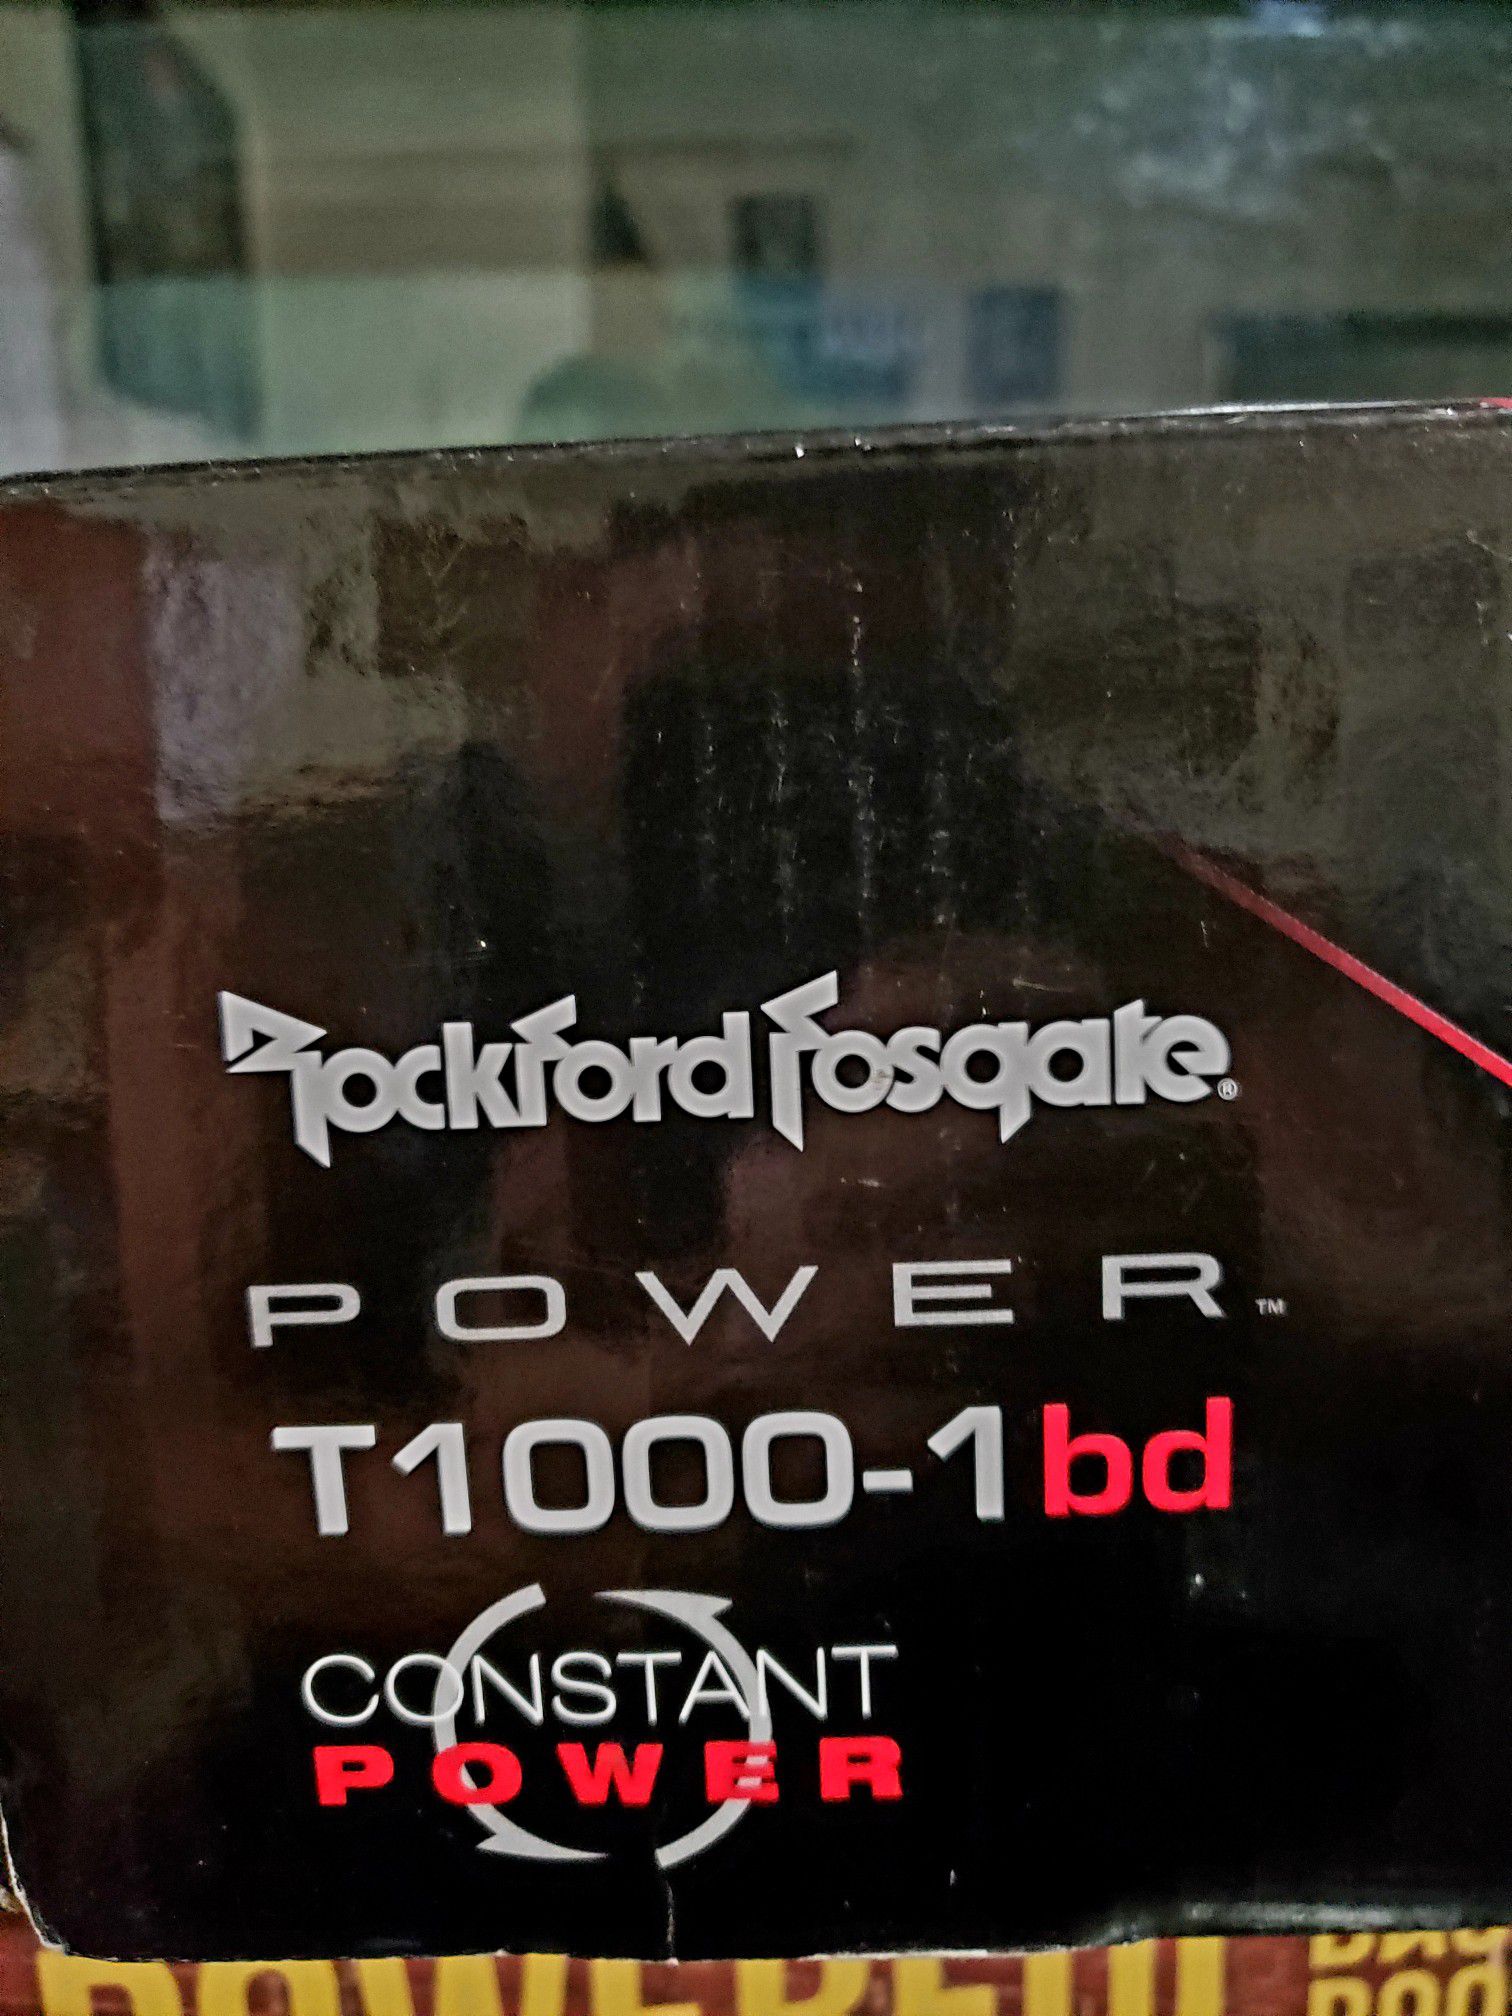 Rockford fosgate power series 💪 1000w brand new